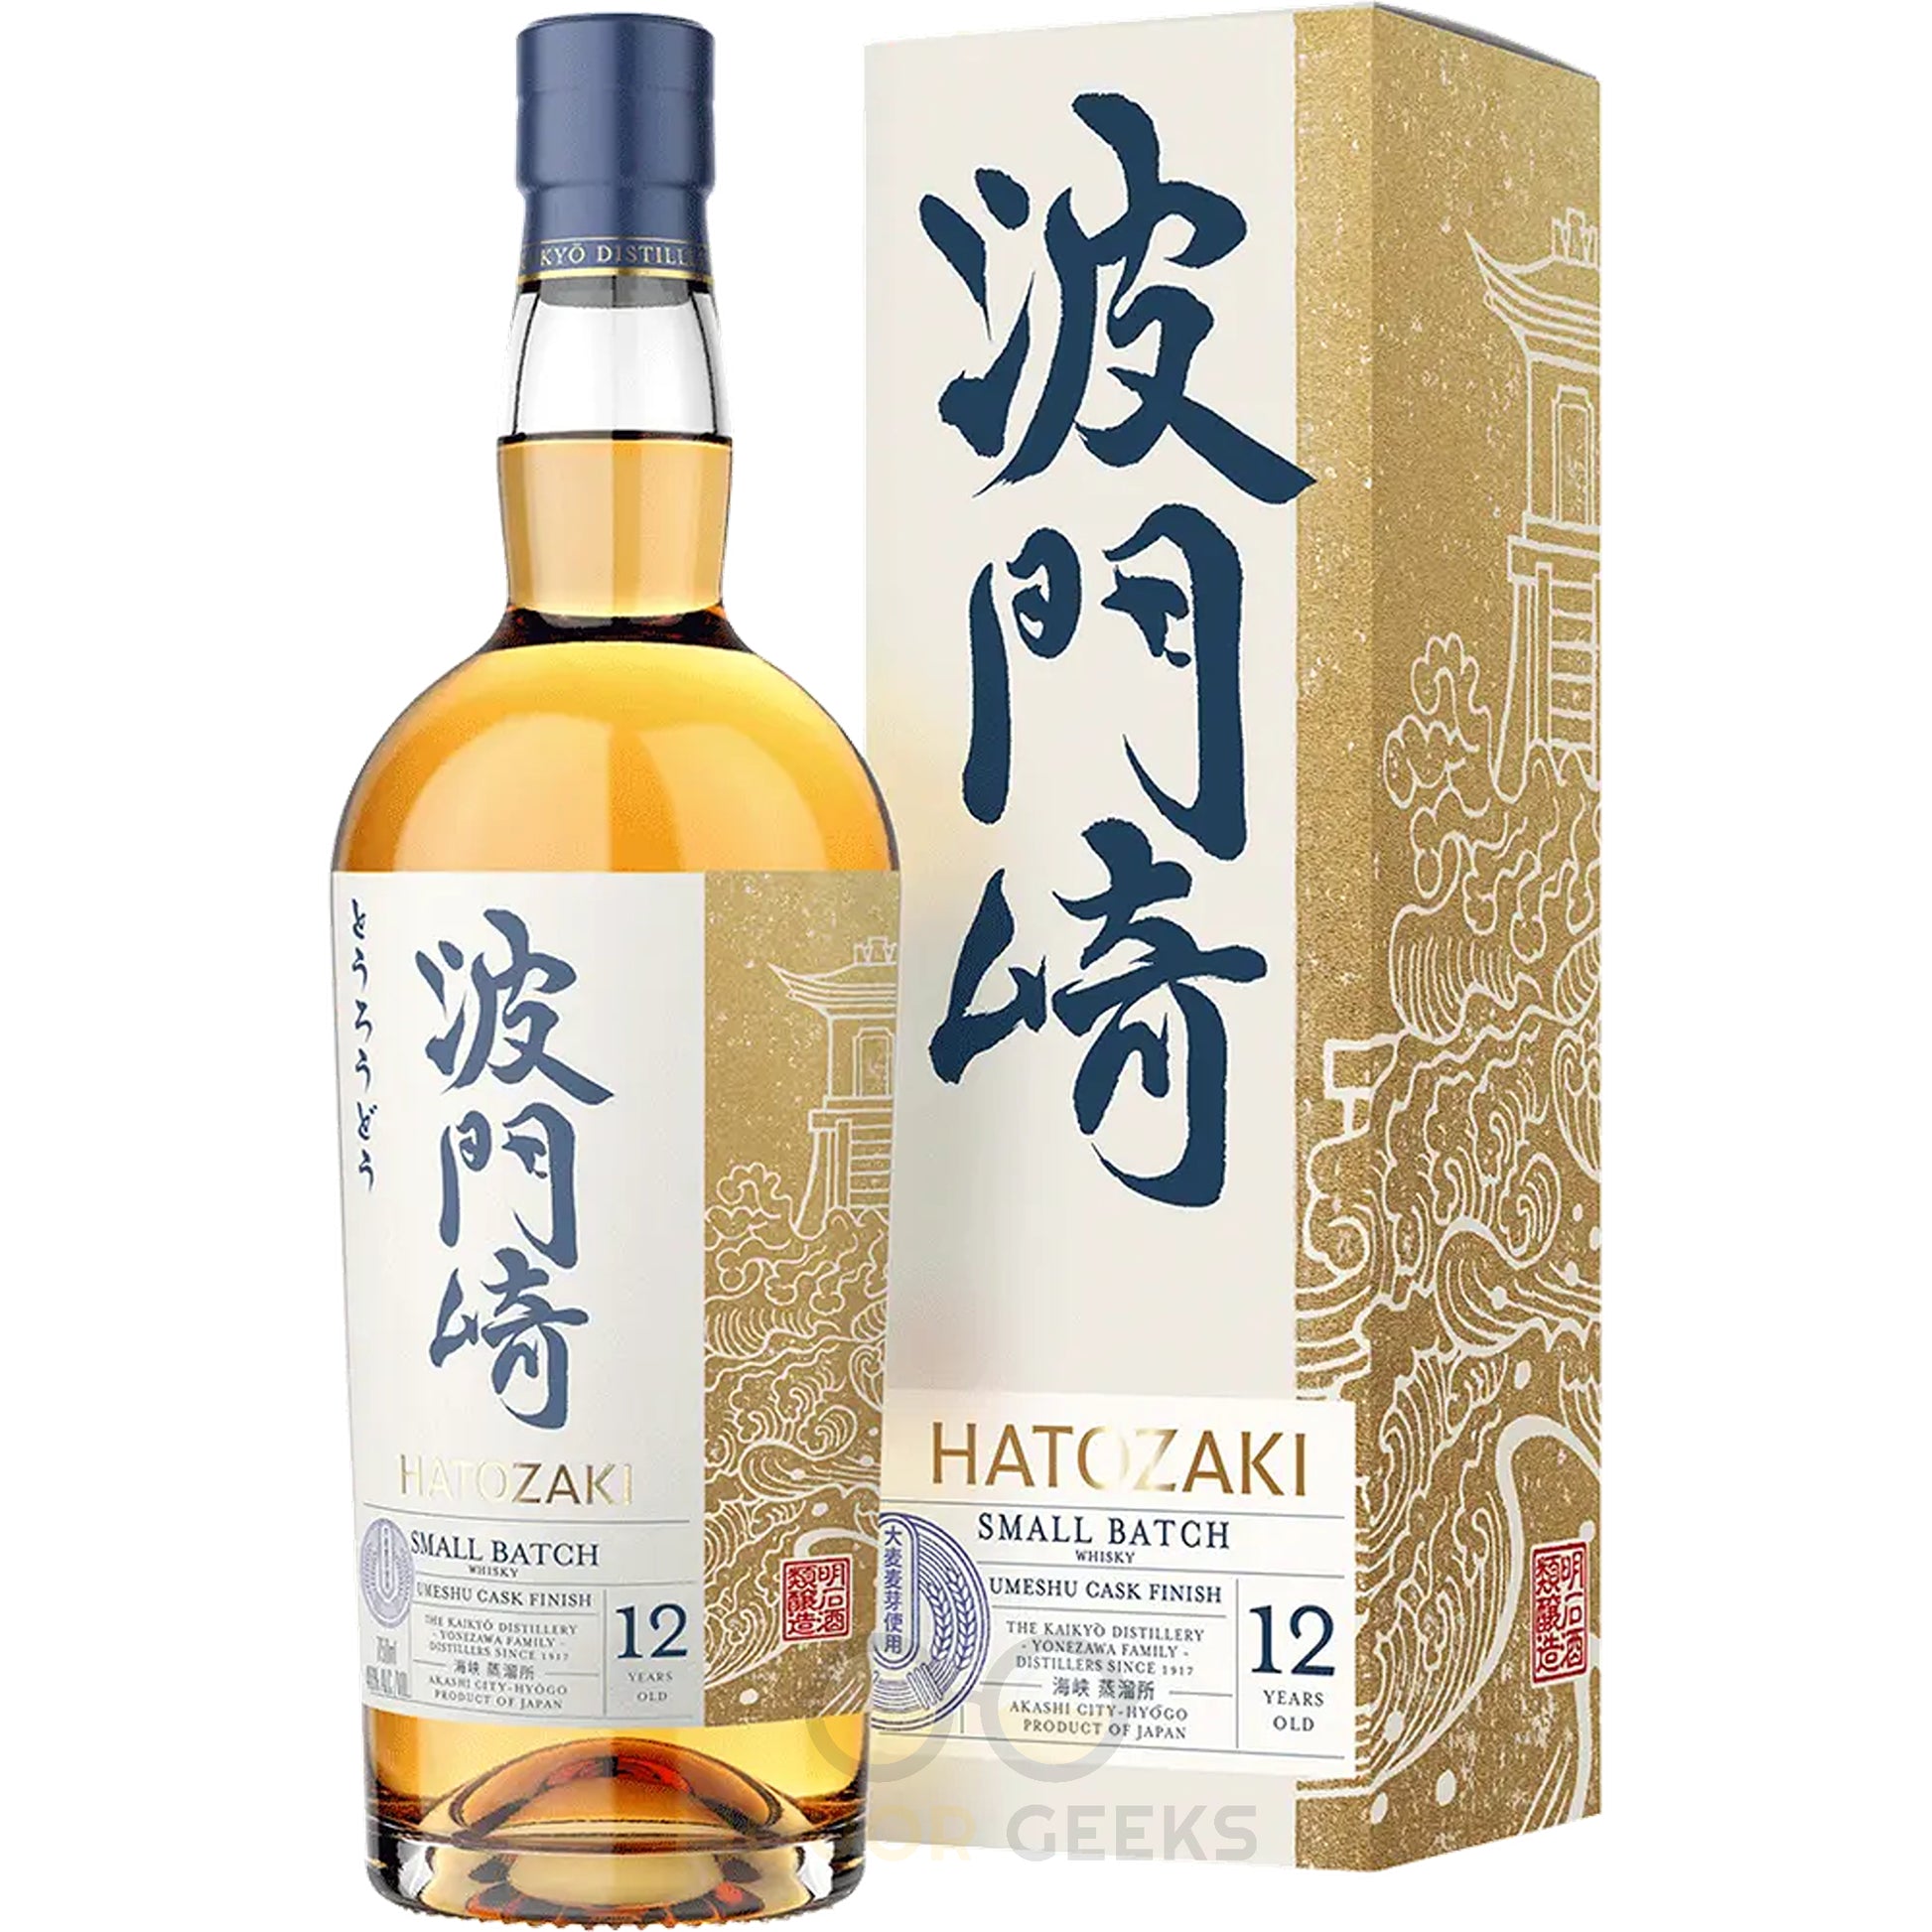 Hatozaki Small Batch 12 Year - Liquor Geeks